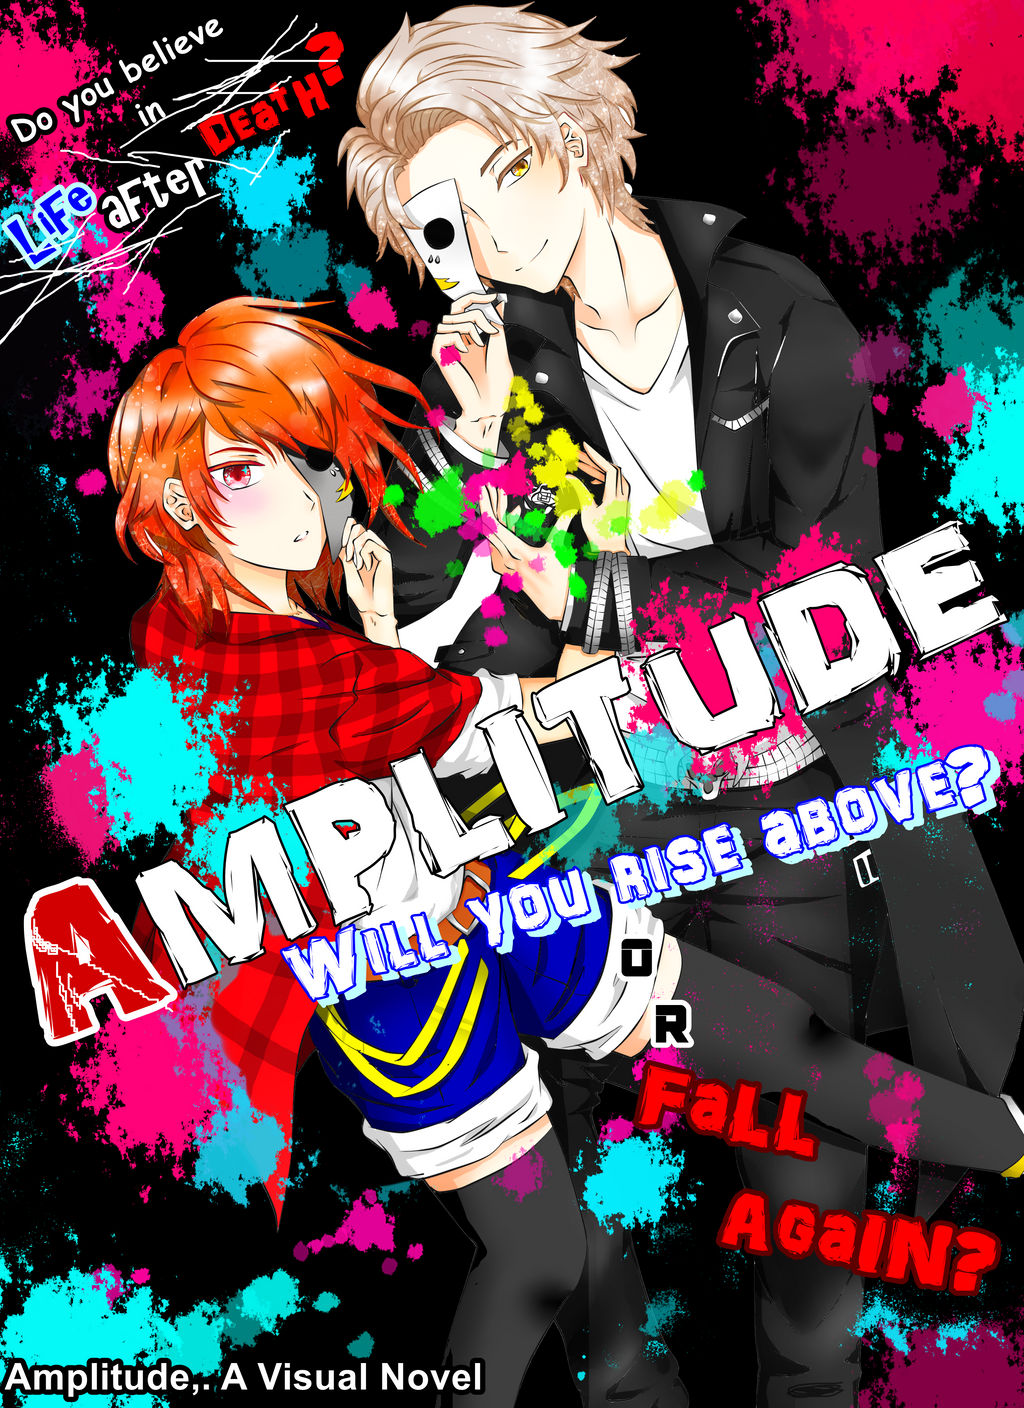 Amplitude Poster Contest